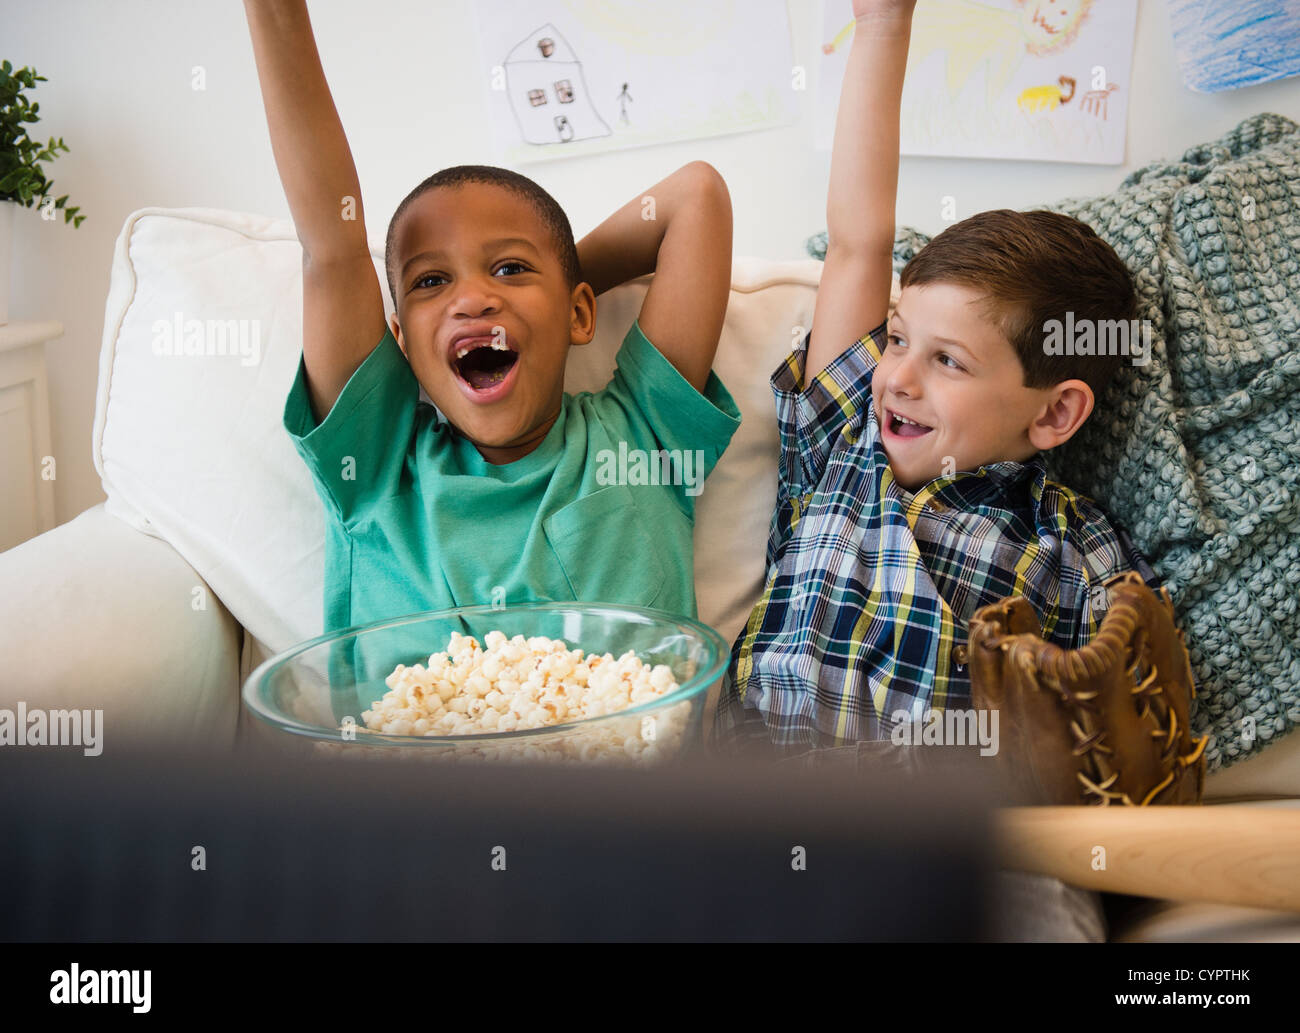 Boys eating popcorn and cheering Stock Photo